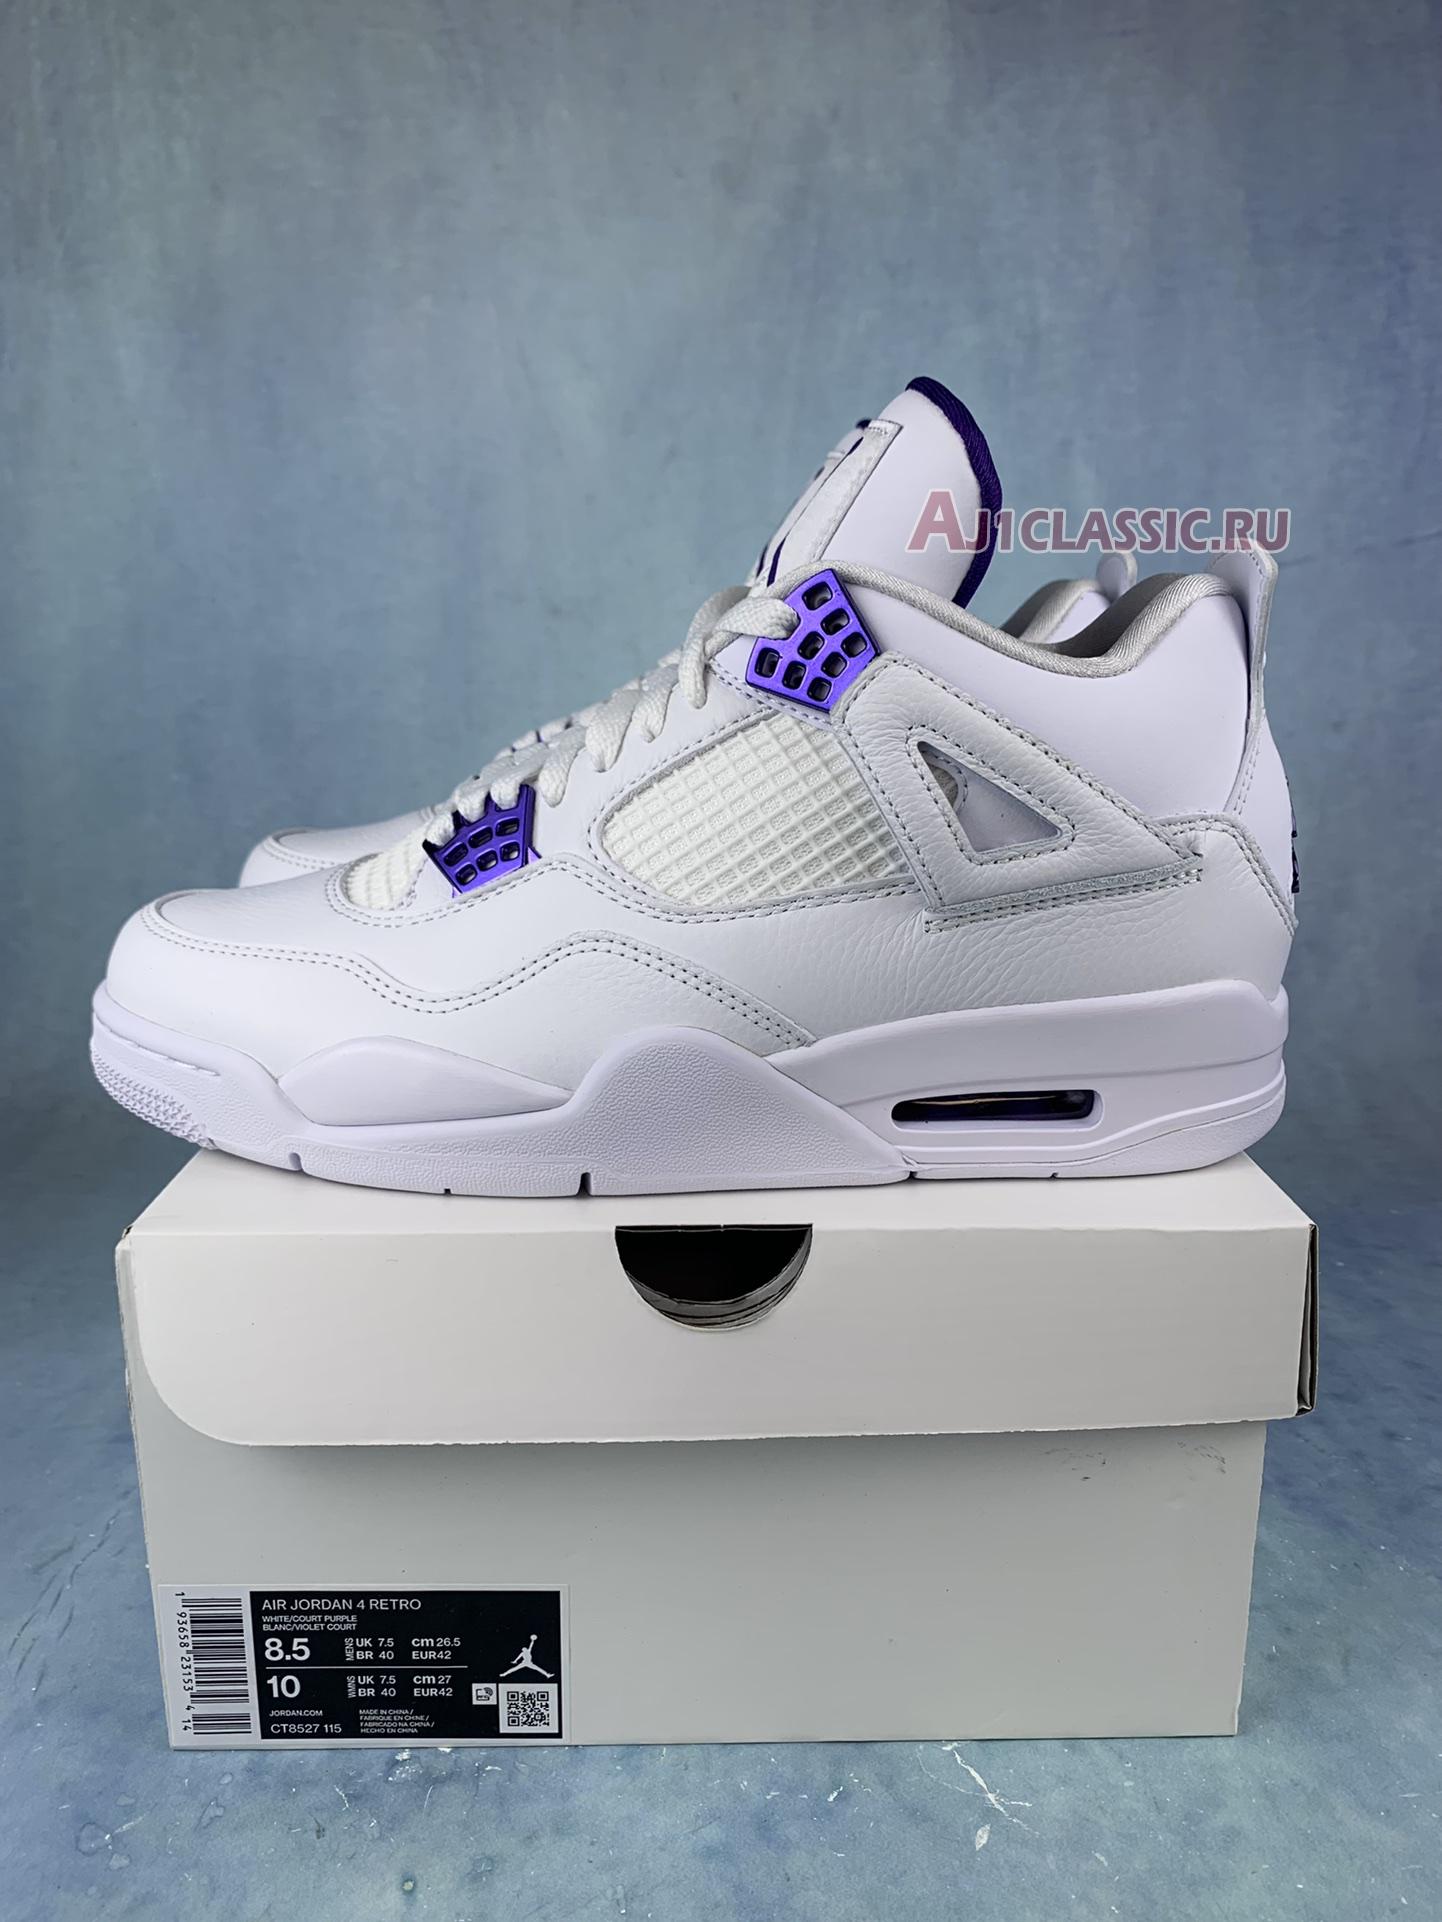 Air Jordan 4 Retro Purple Metallic CT8527-115 White/Court Purple/Metallic Silver Sneakers